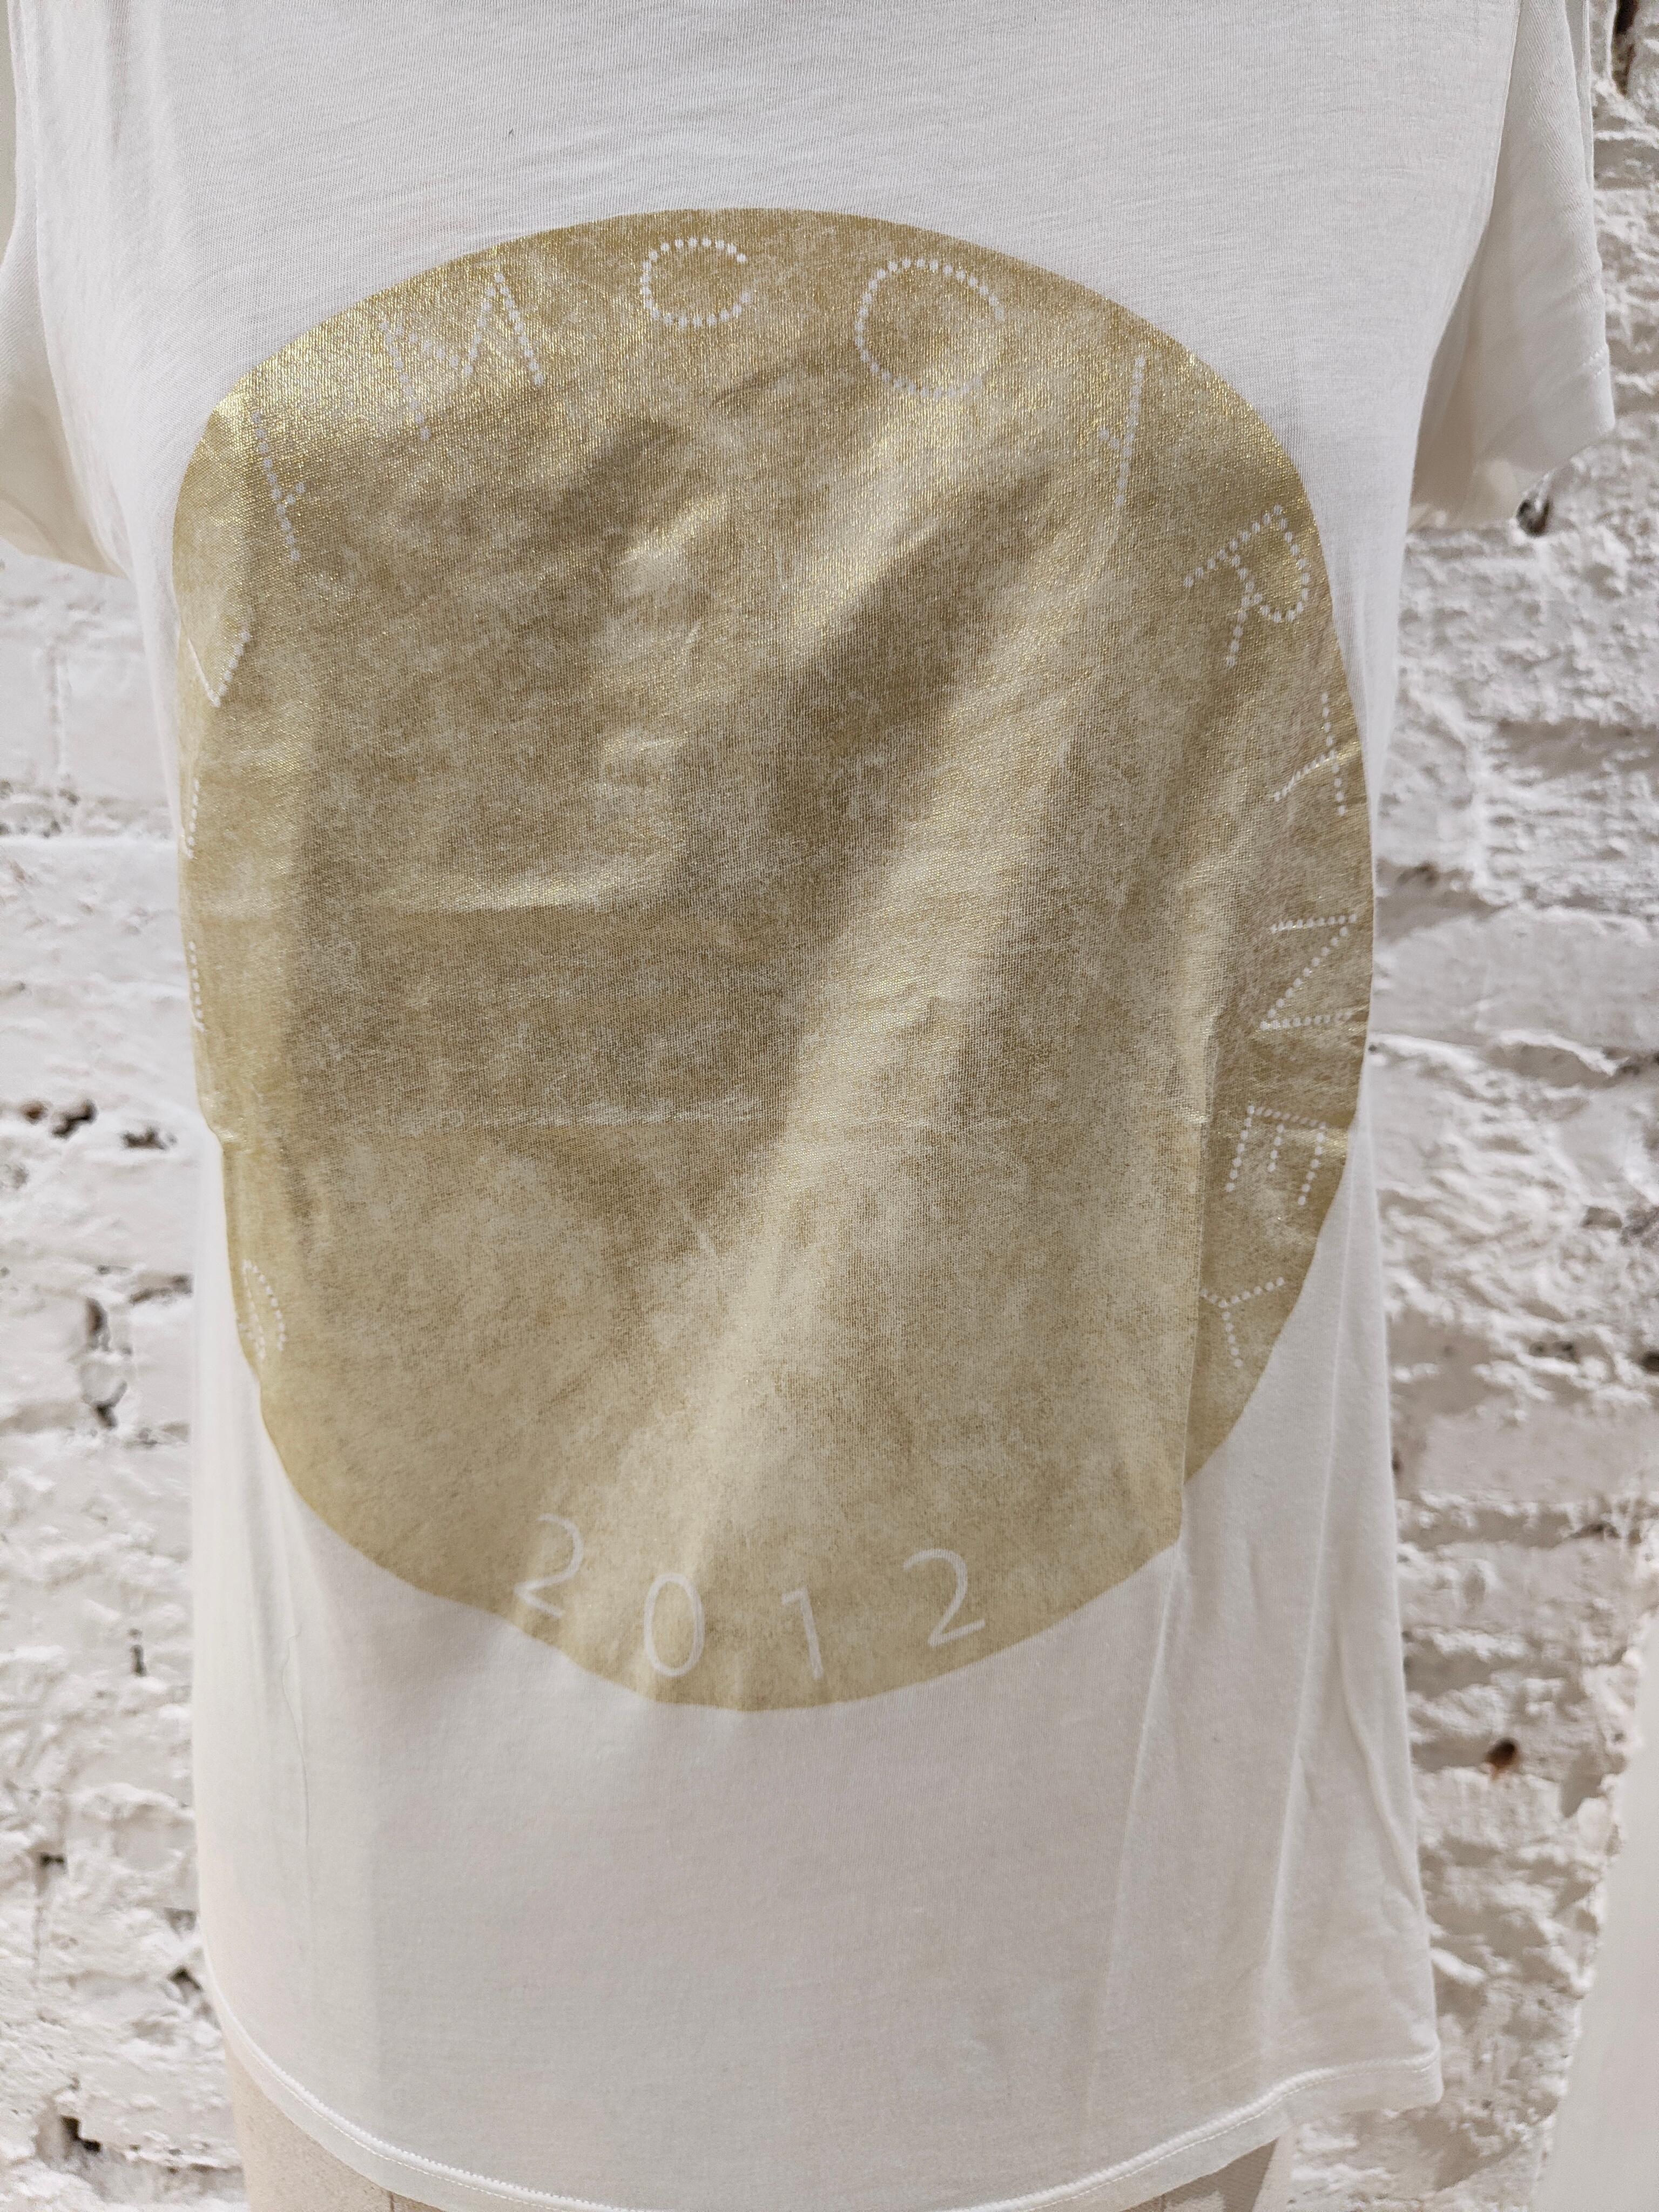 Stella McCartney white gold t-shirt
size 44
composition cotton